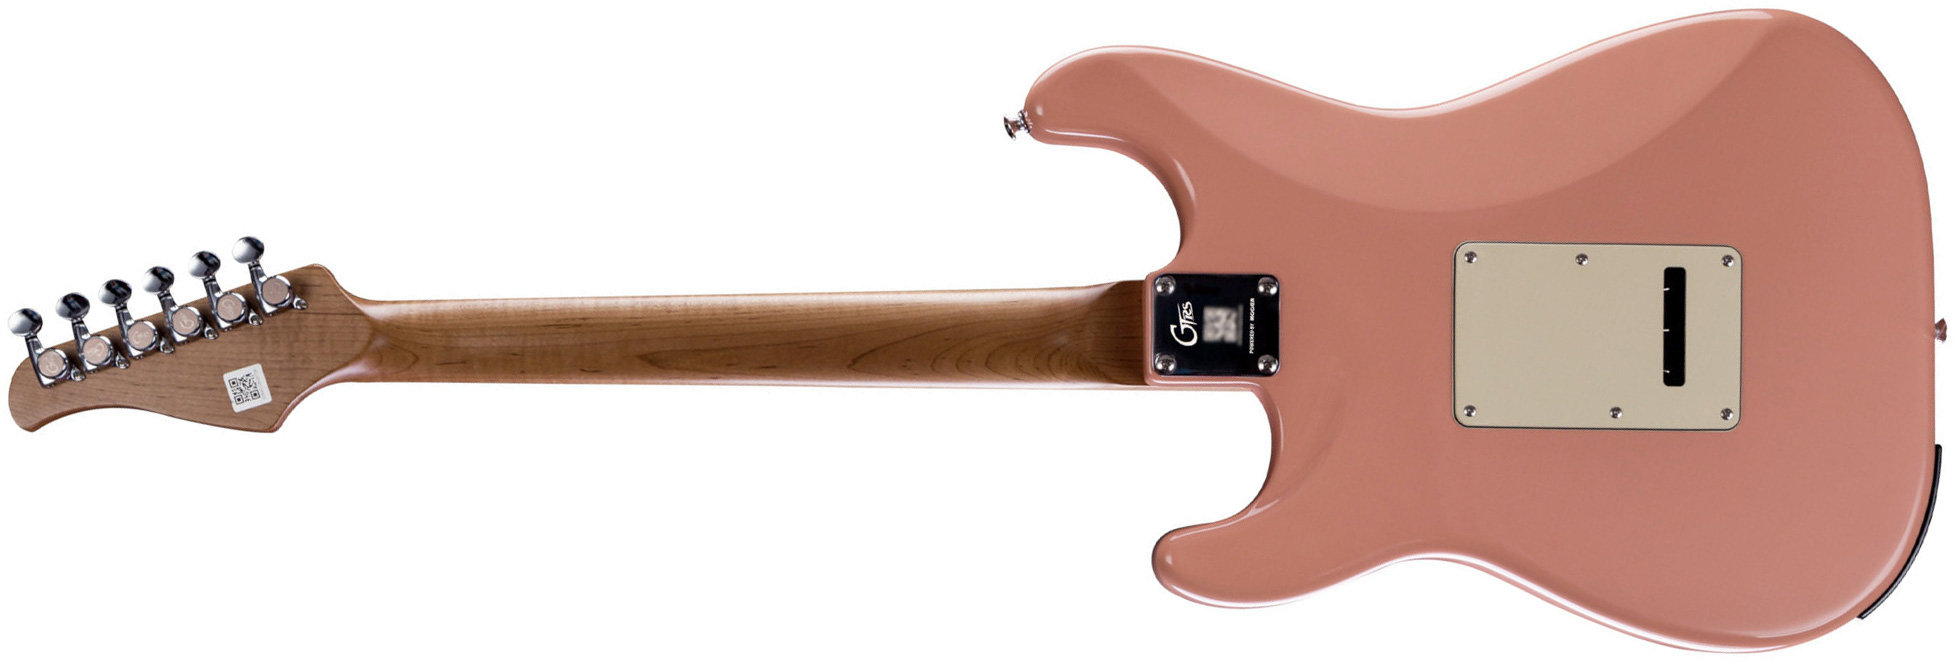 Mooer Gtrs P800 Pro Intelligent Guitar Hss Trem Rw - Flamingo Pink - Guitarra eléctrica de modelización - Variation 1